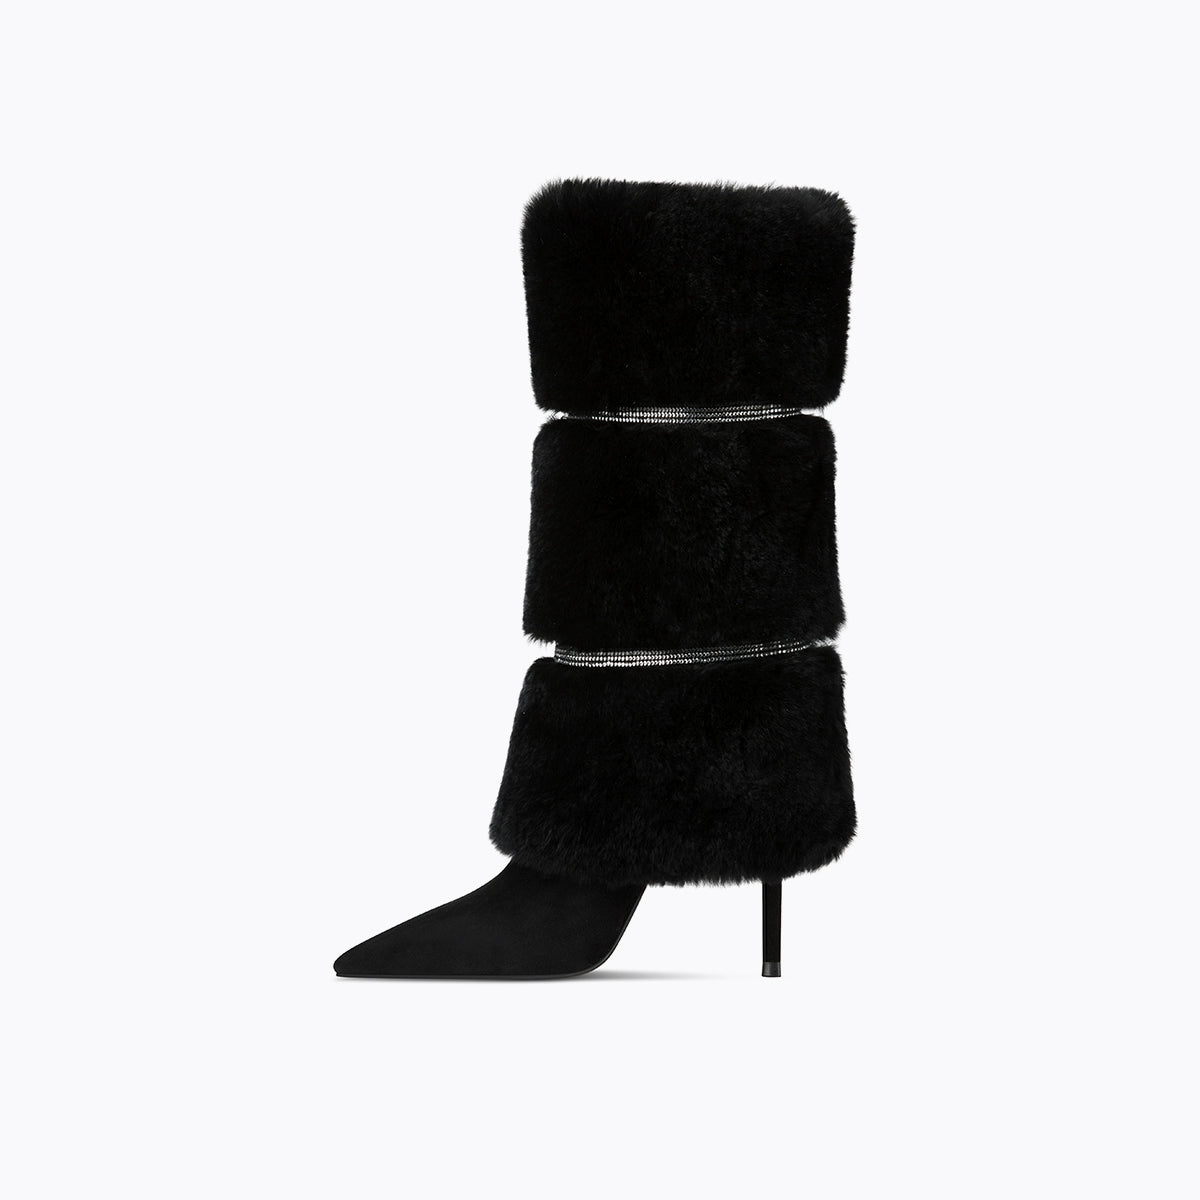 Fabfei Fall/Winter pointed toe black high heel sexy stiletto mid-length boots fur boot - Marai